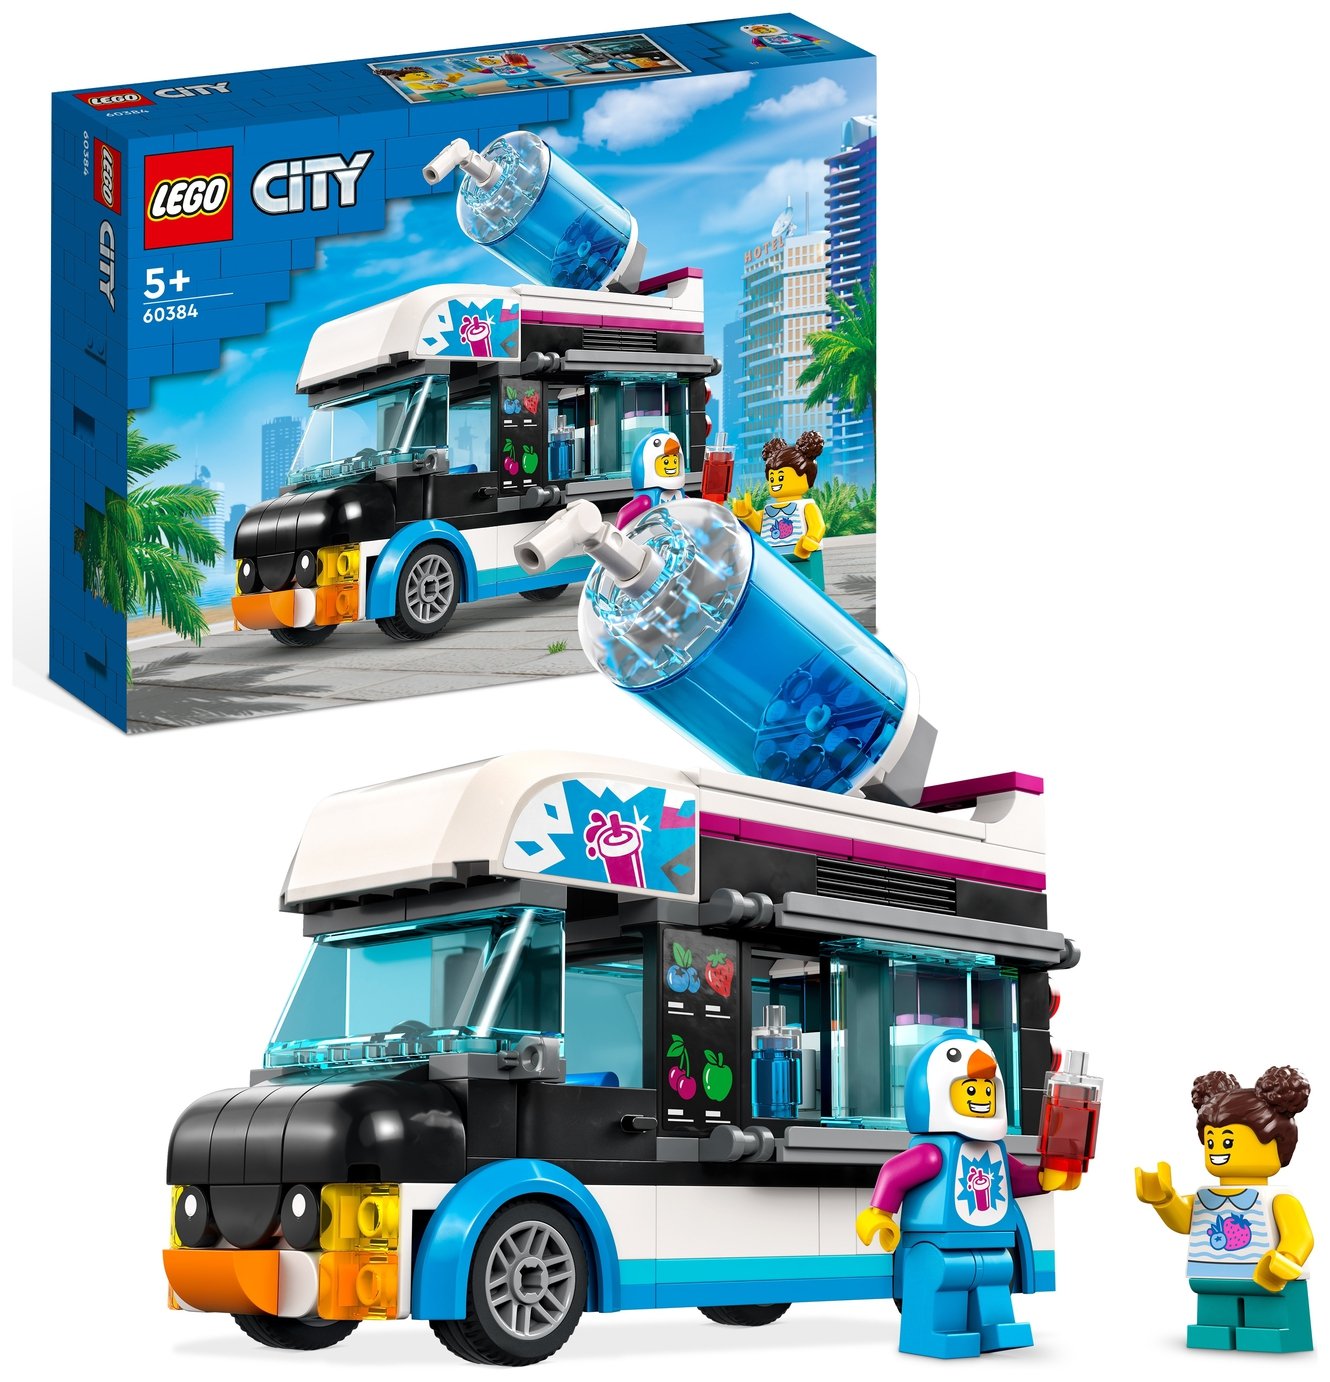 LEGO City Great Vehicles Penguin Slushy Van Truck Toy 60384